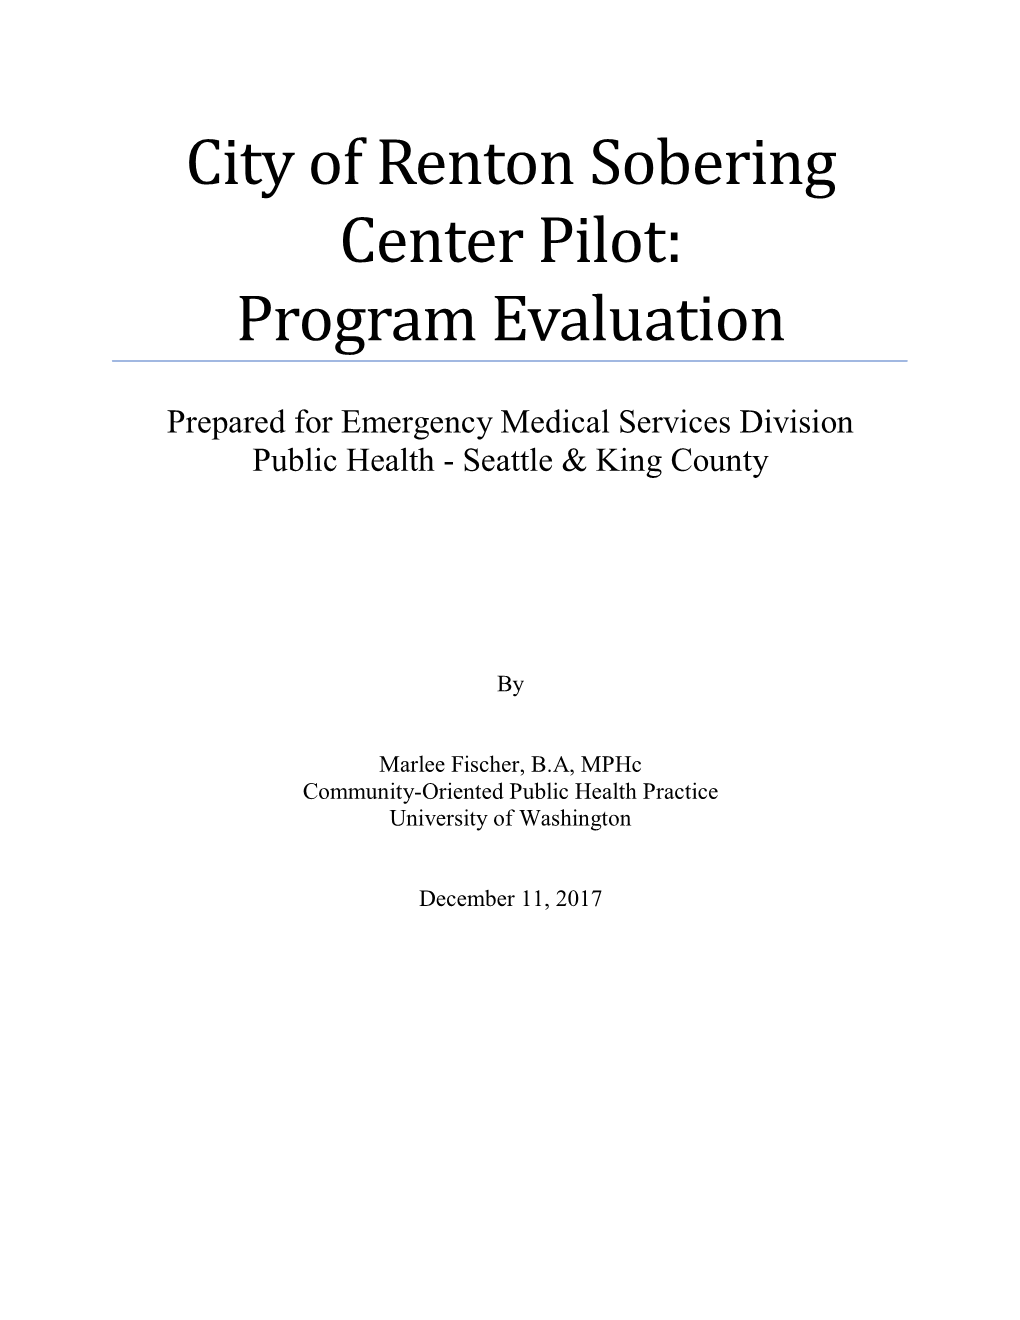 City of Renton Sobering Center Pilot: Program Evaluation